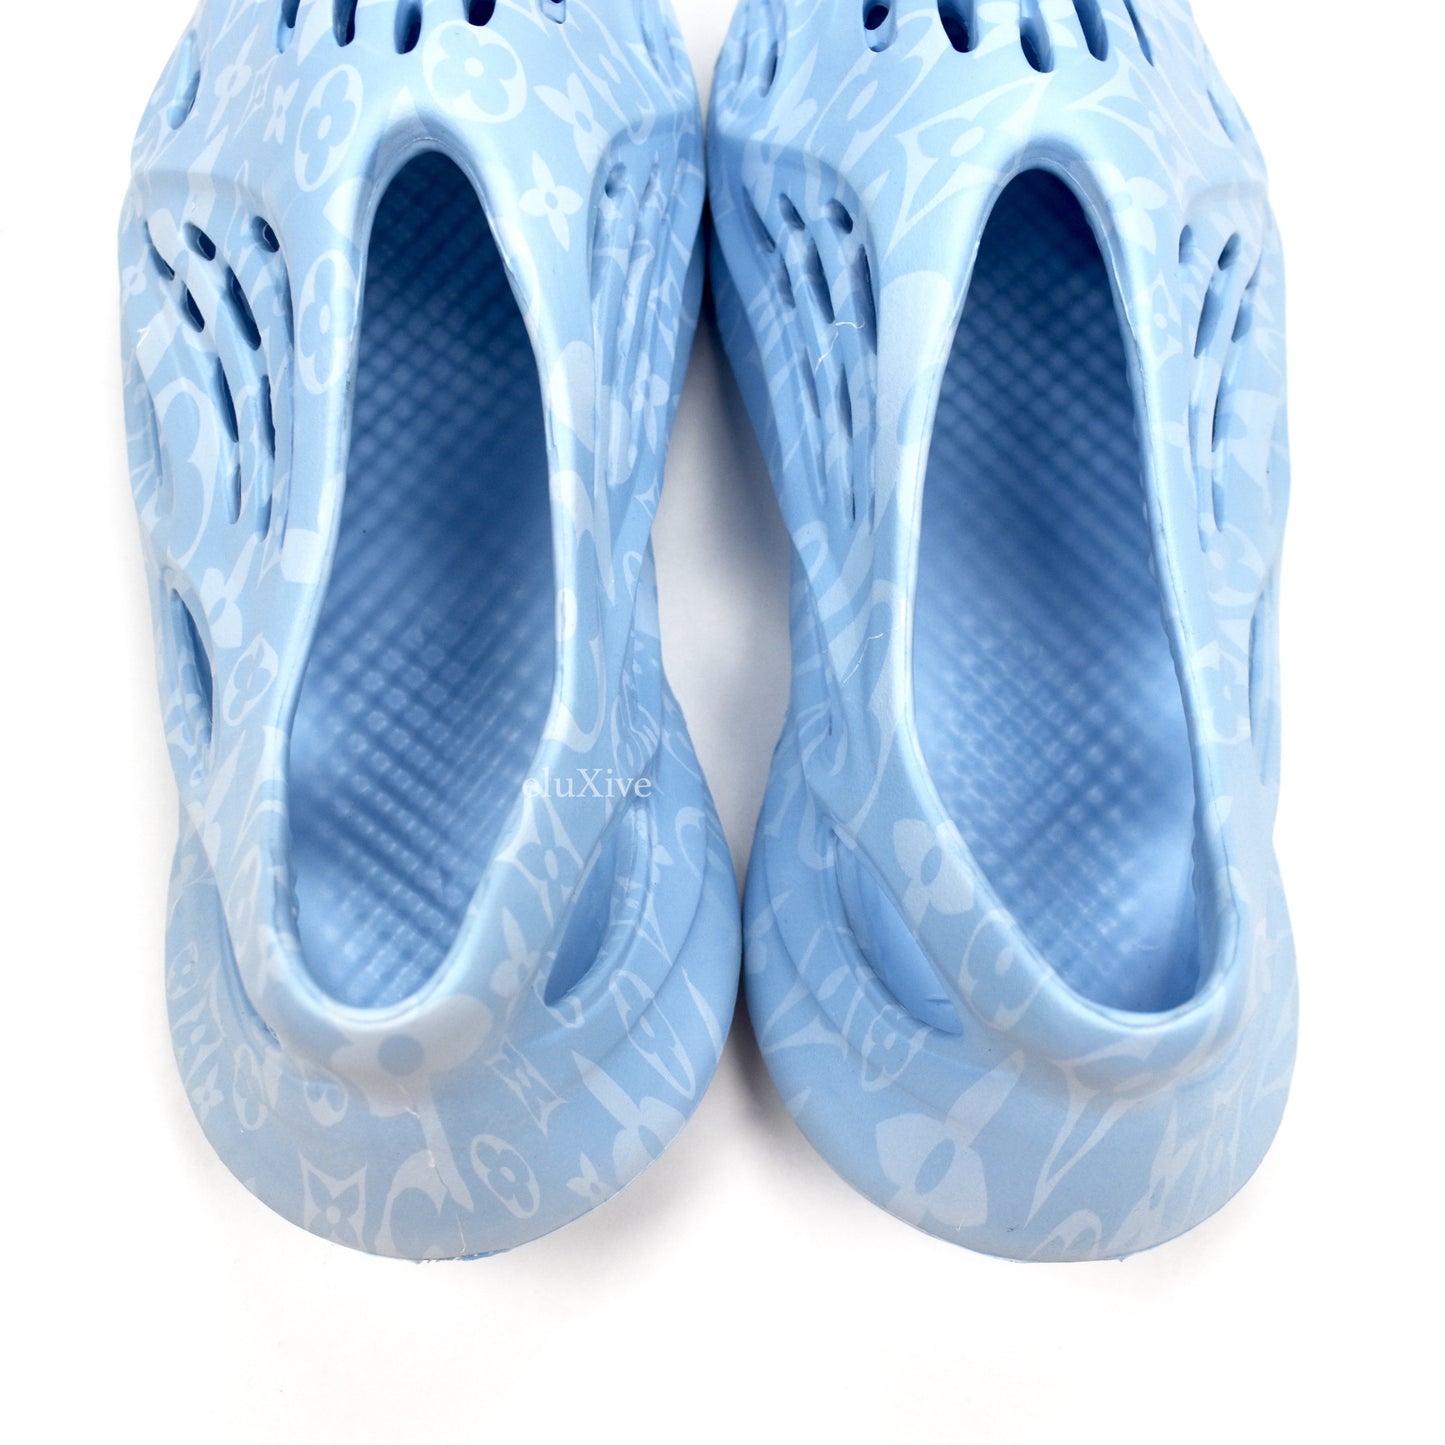 IMRAN POTATO LOBSTER Shoe Blue LV Kanye West Yeezy Foam Runner Size 10  $150.00 - PicClick